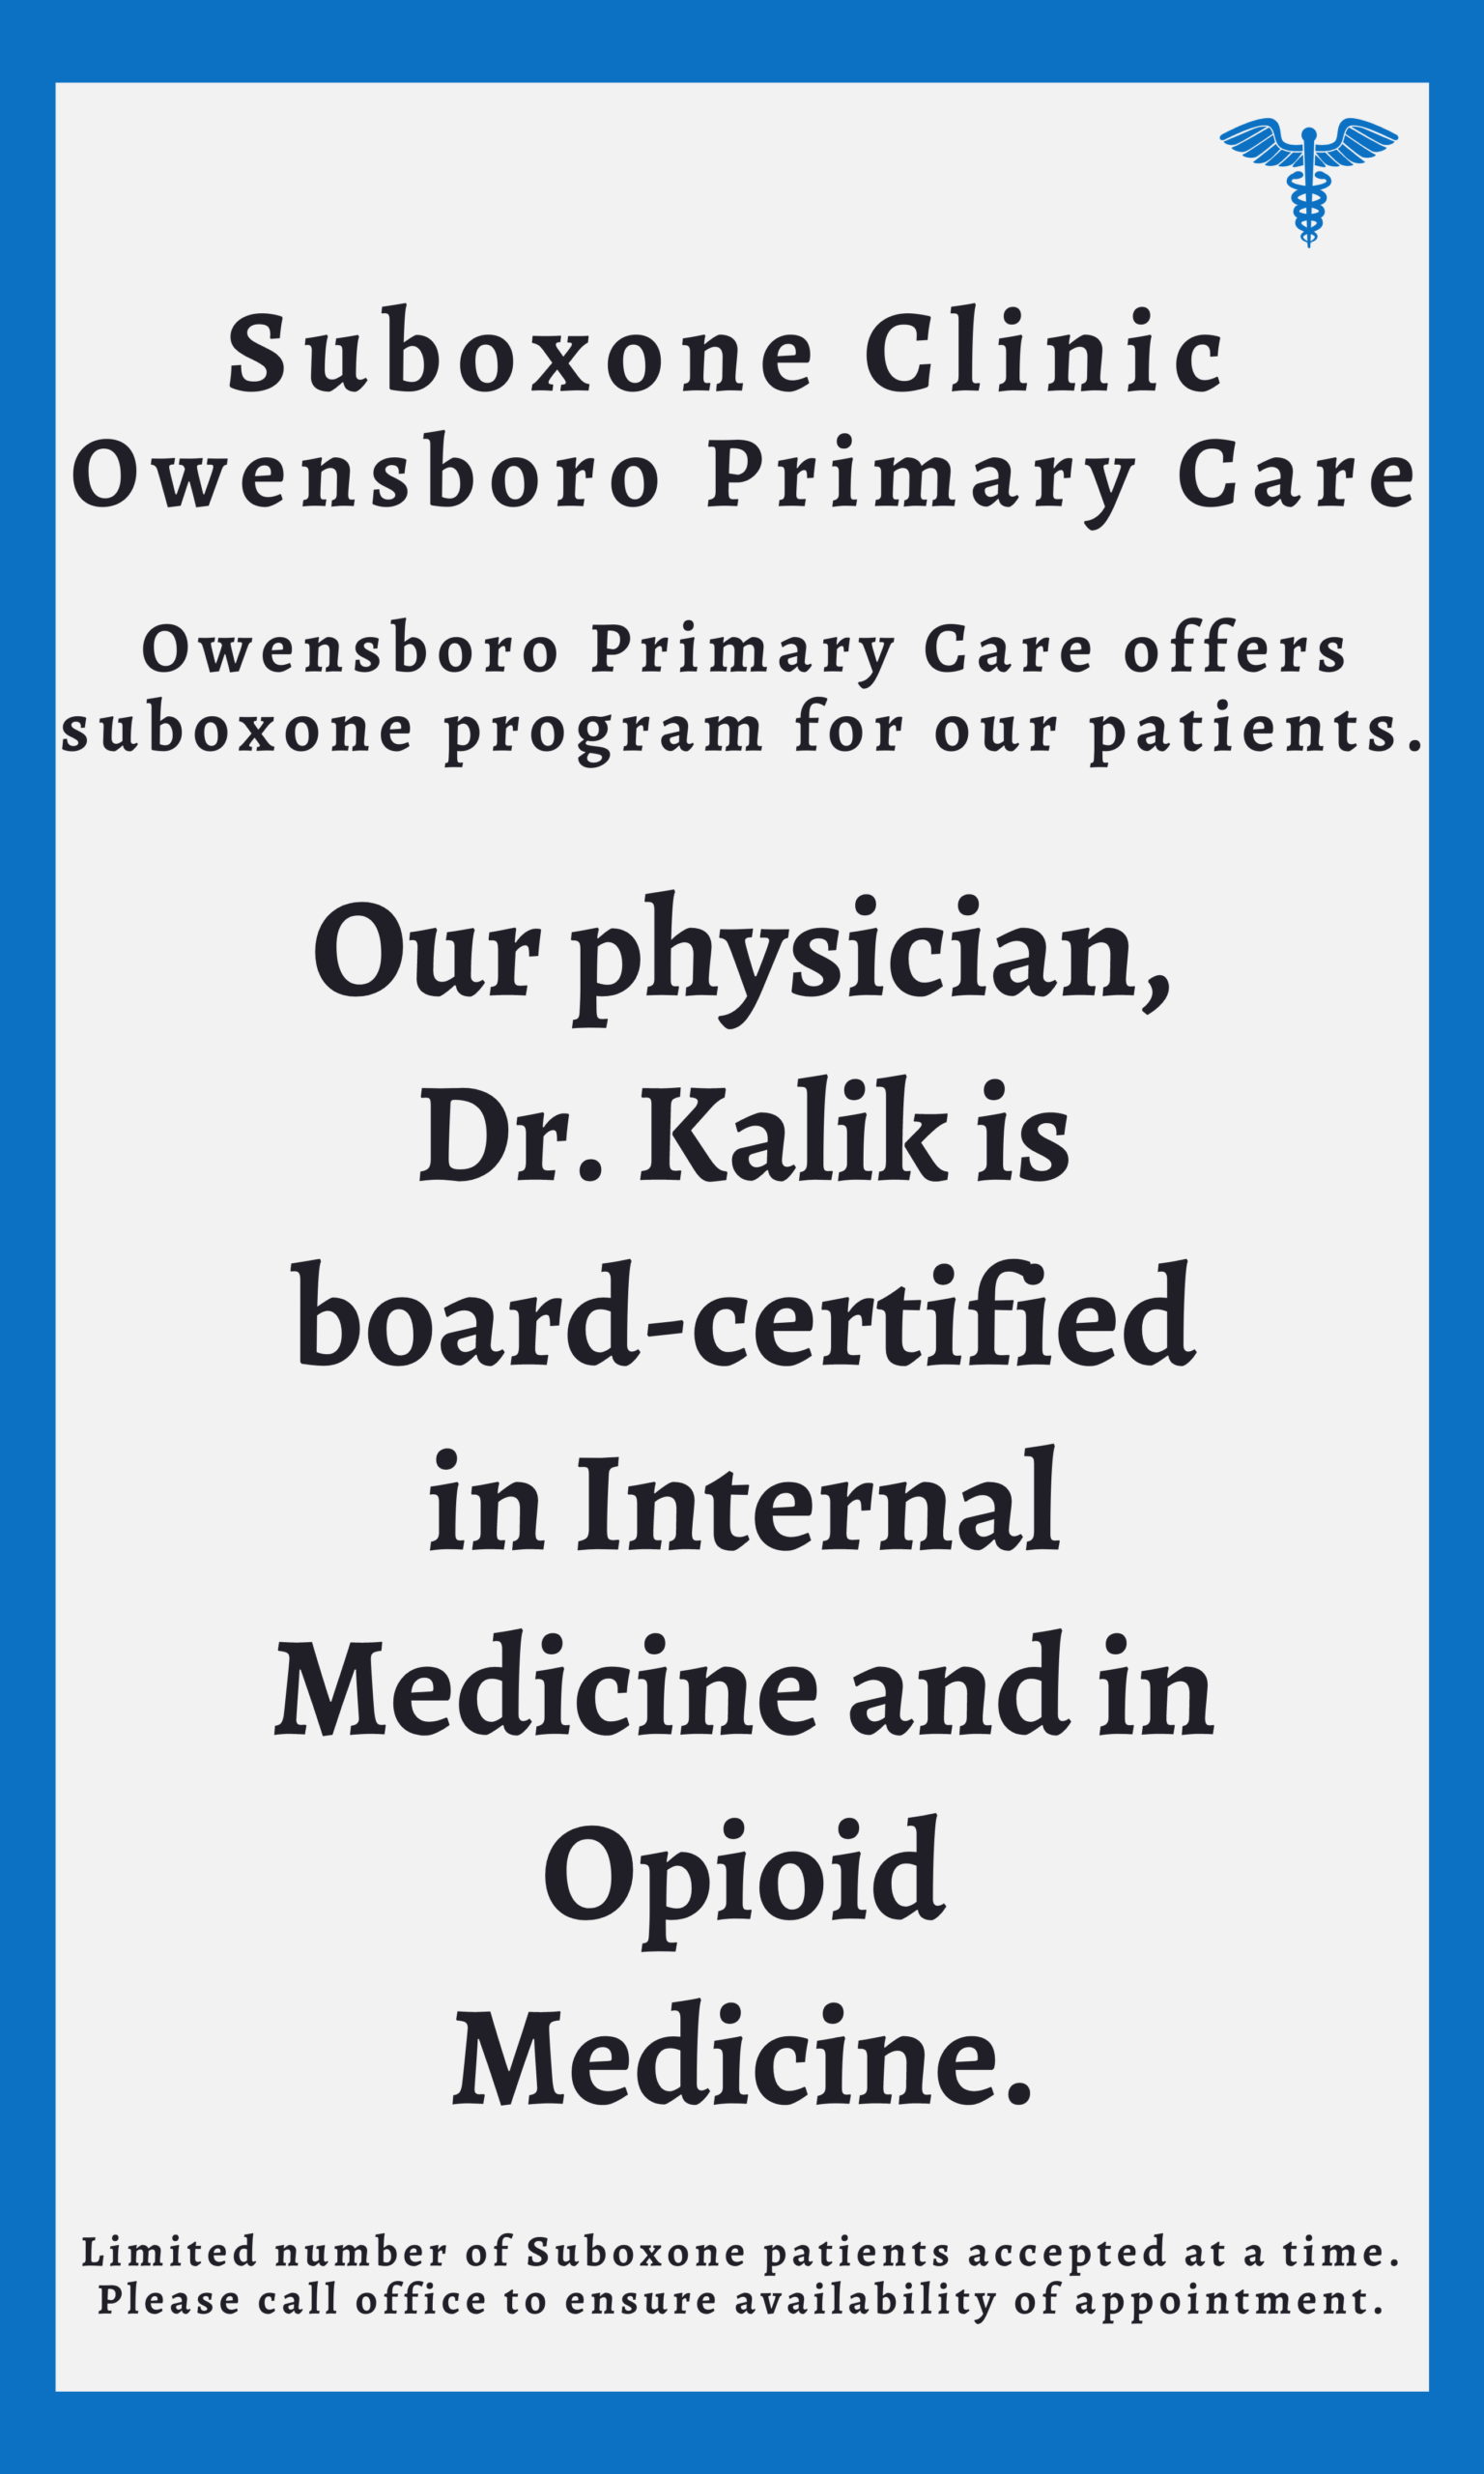 Dr. Aseedu Kalik is board-certified in Internal Medicine and in Opioid Medicine.